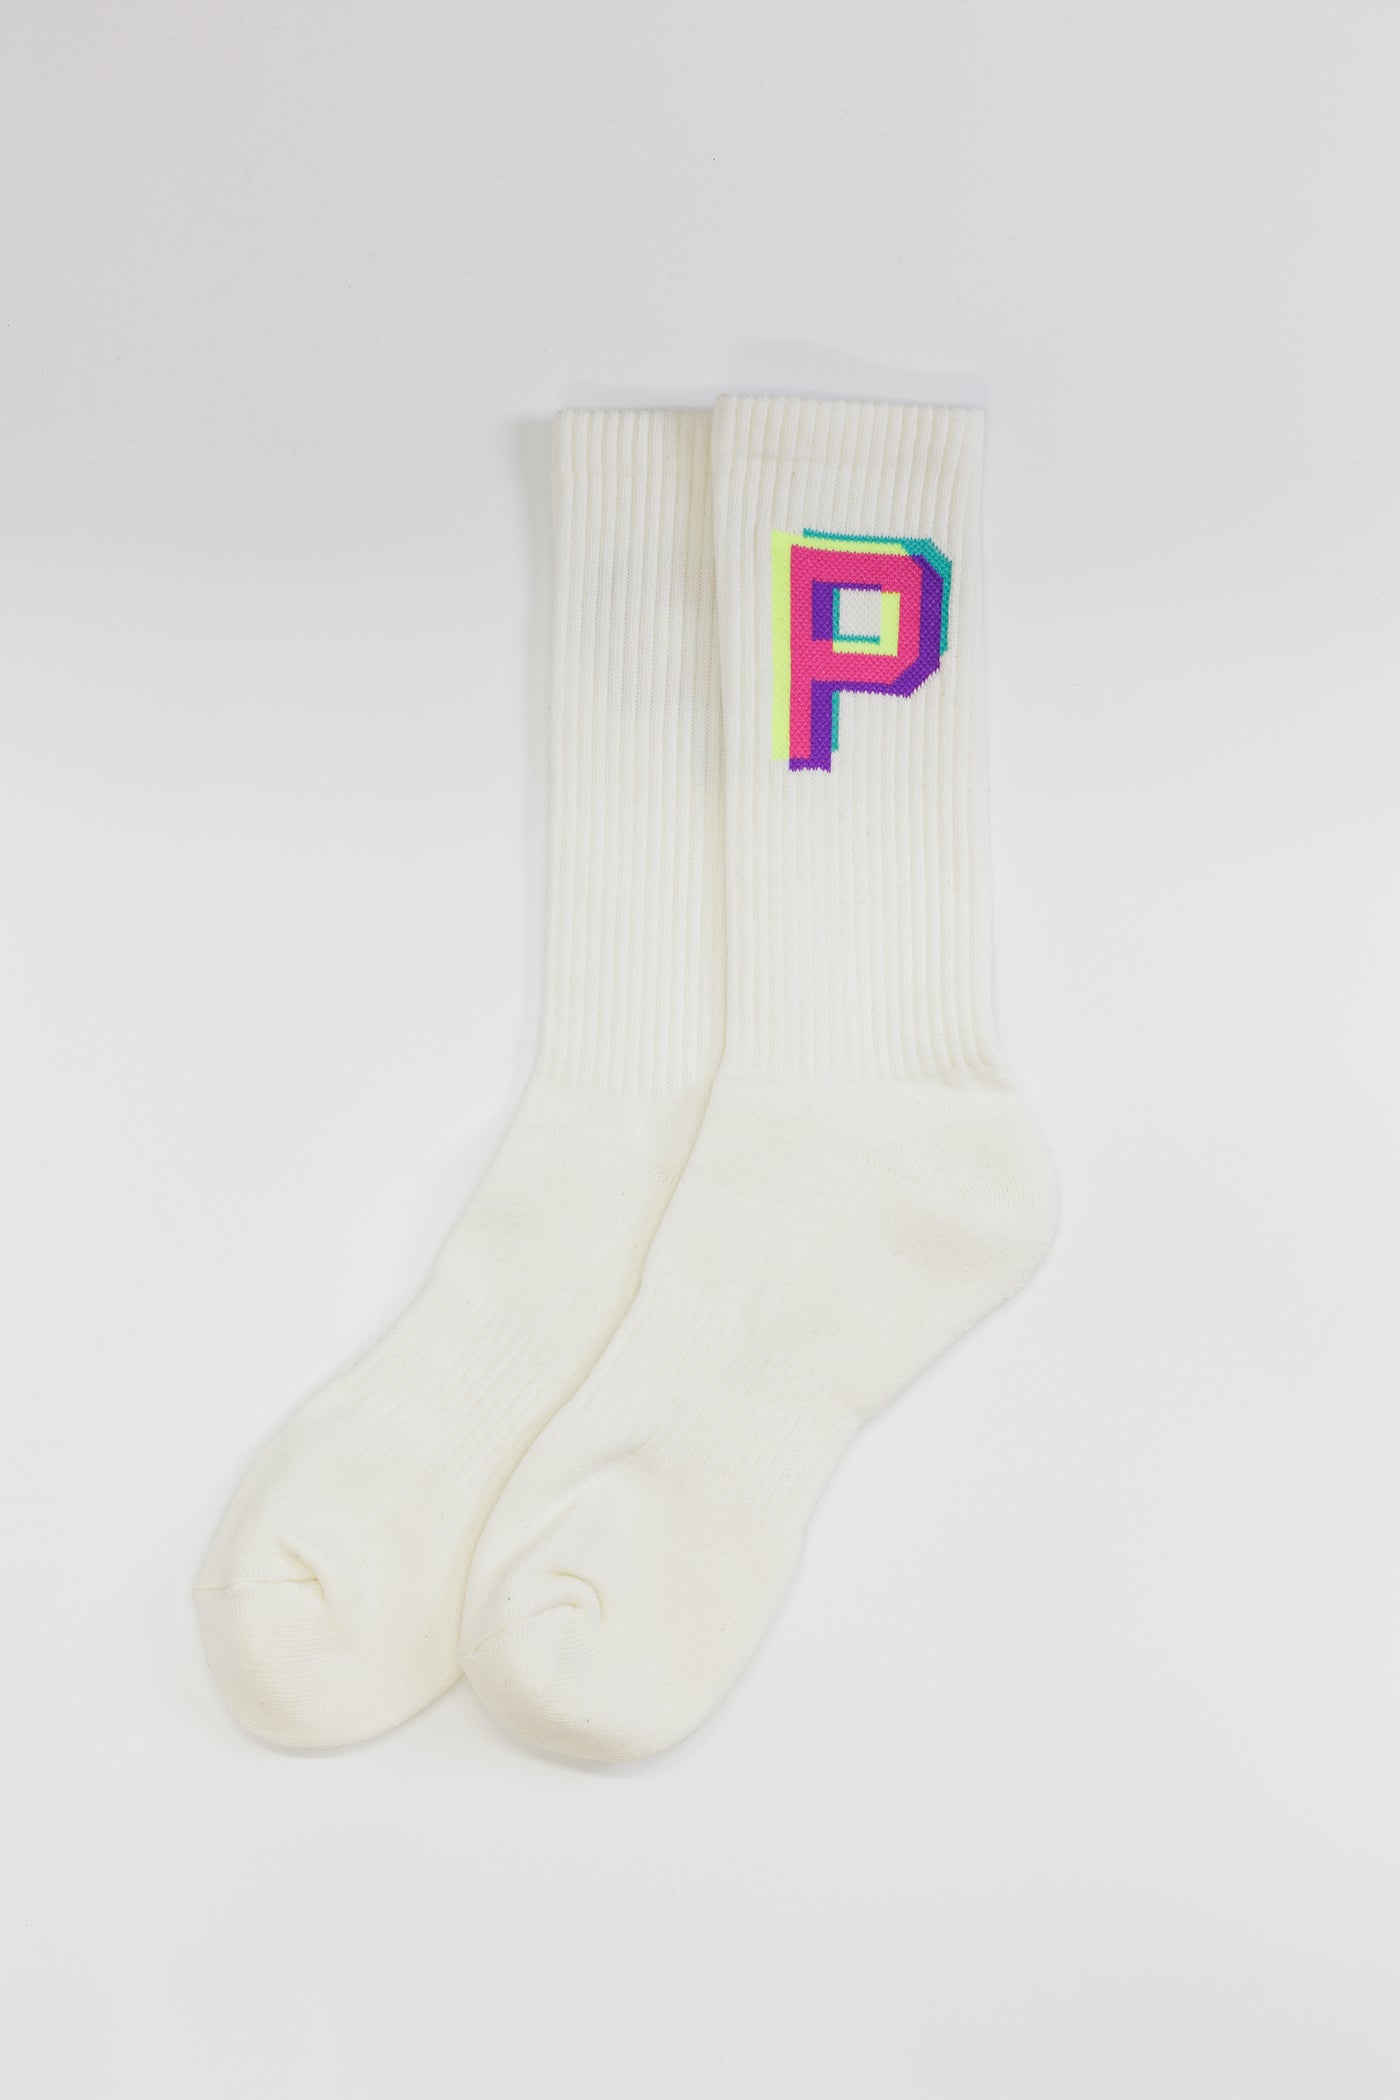 BIG 『P』gradation socks  /  ivory